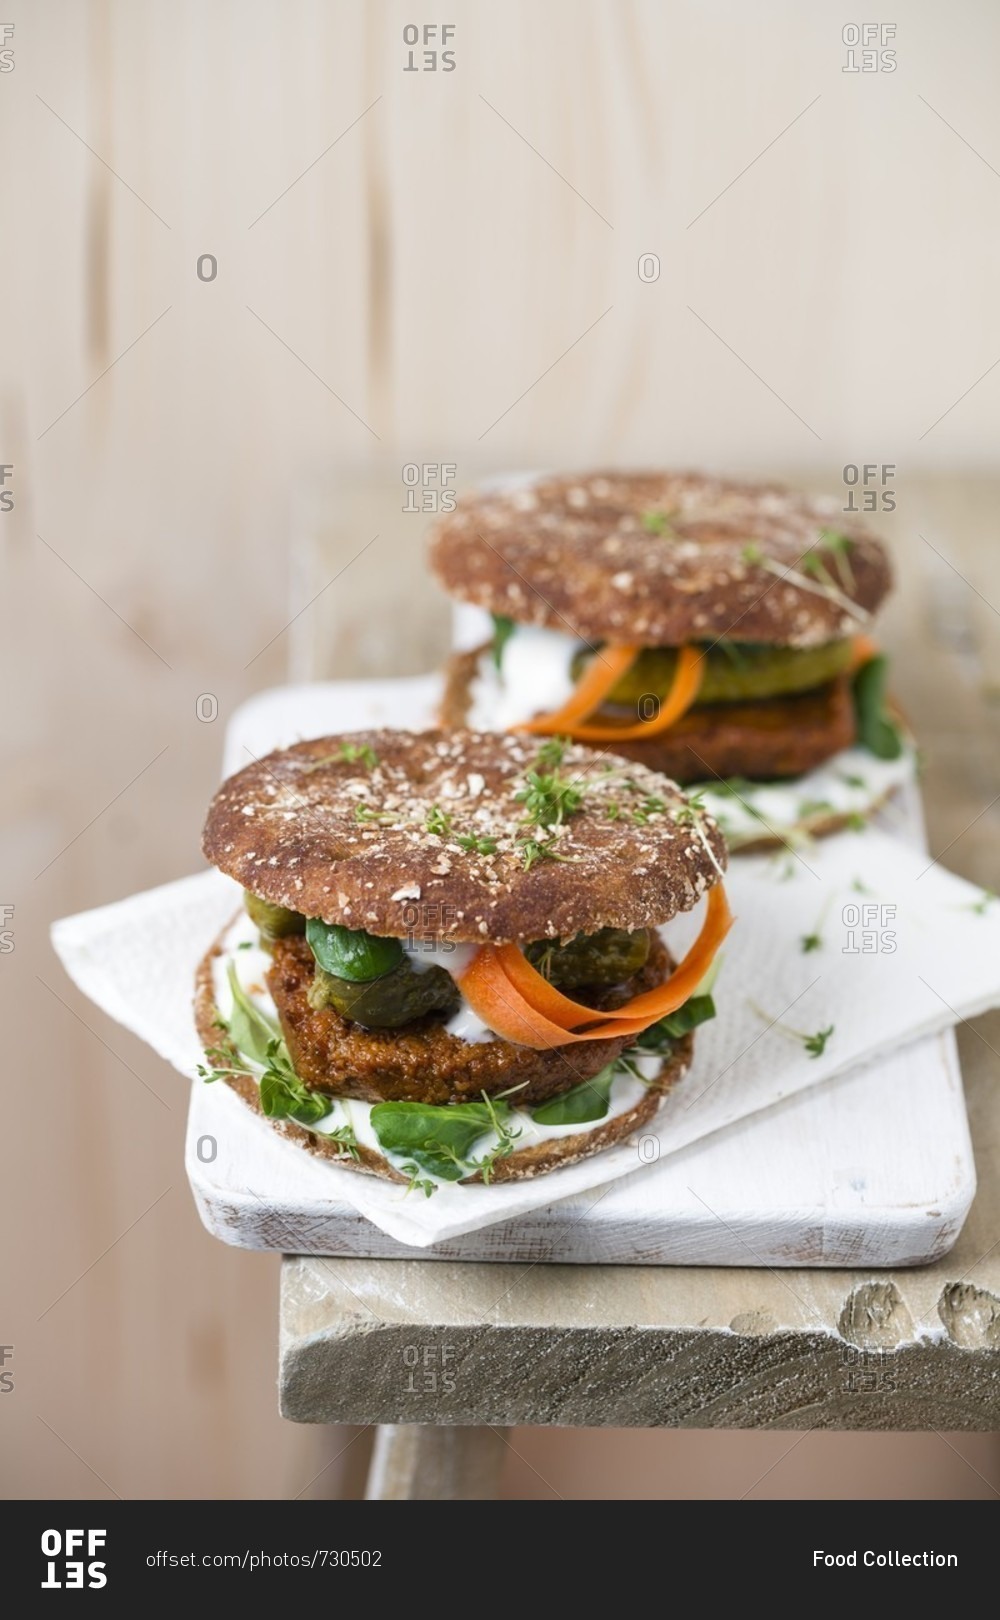 Vegan burger with tofu patty, gherkins, lamb\'s lettuce, carrot and cress